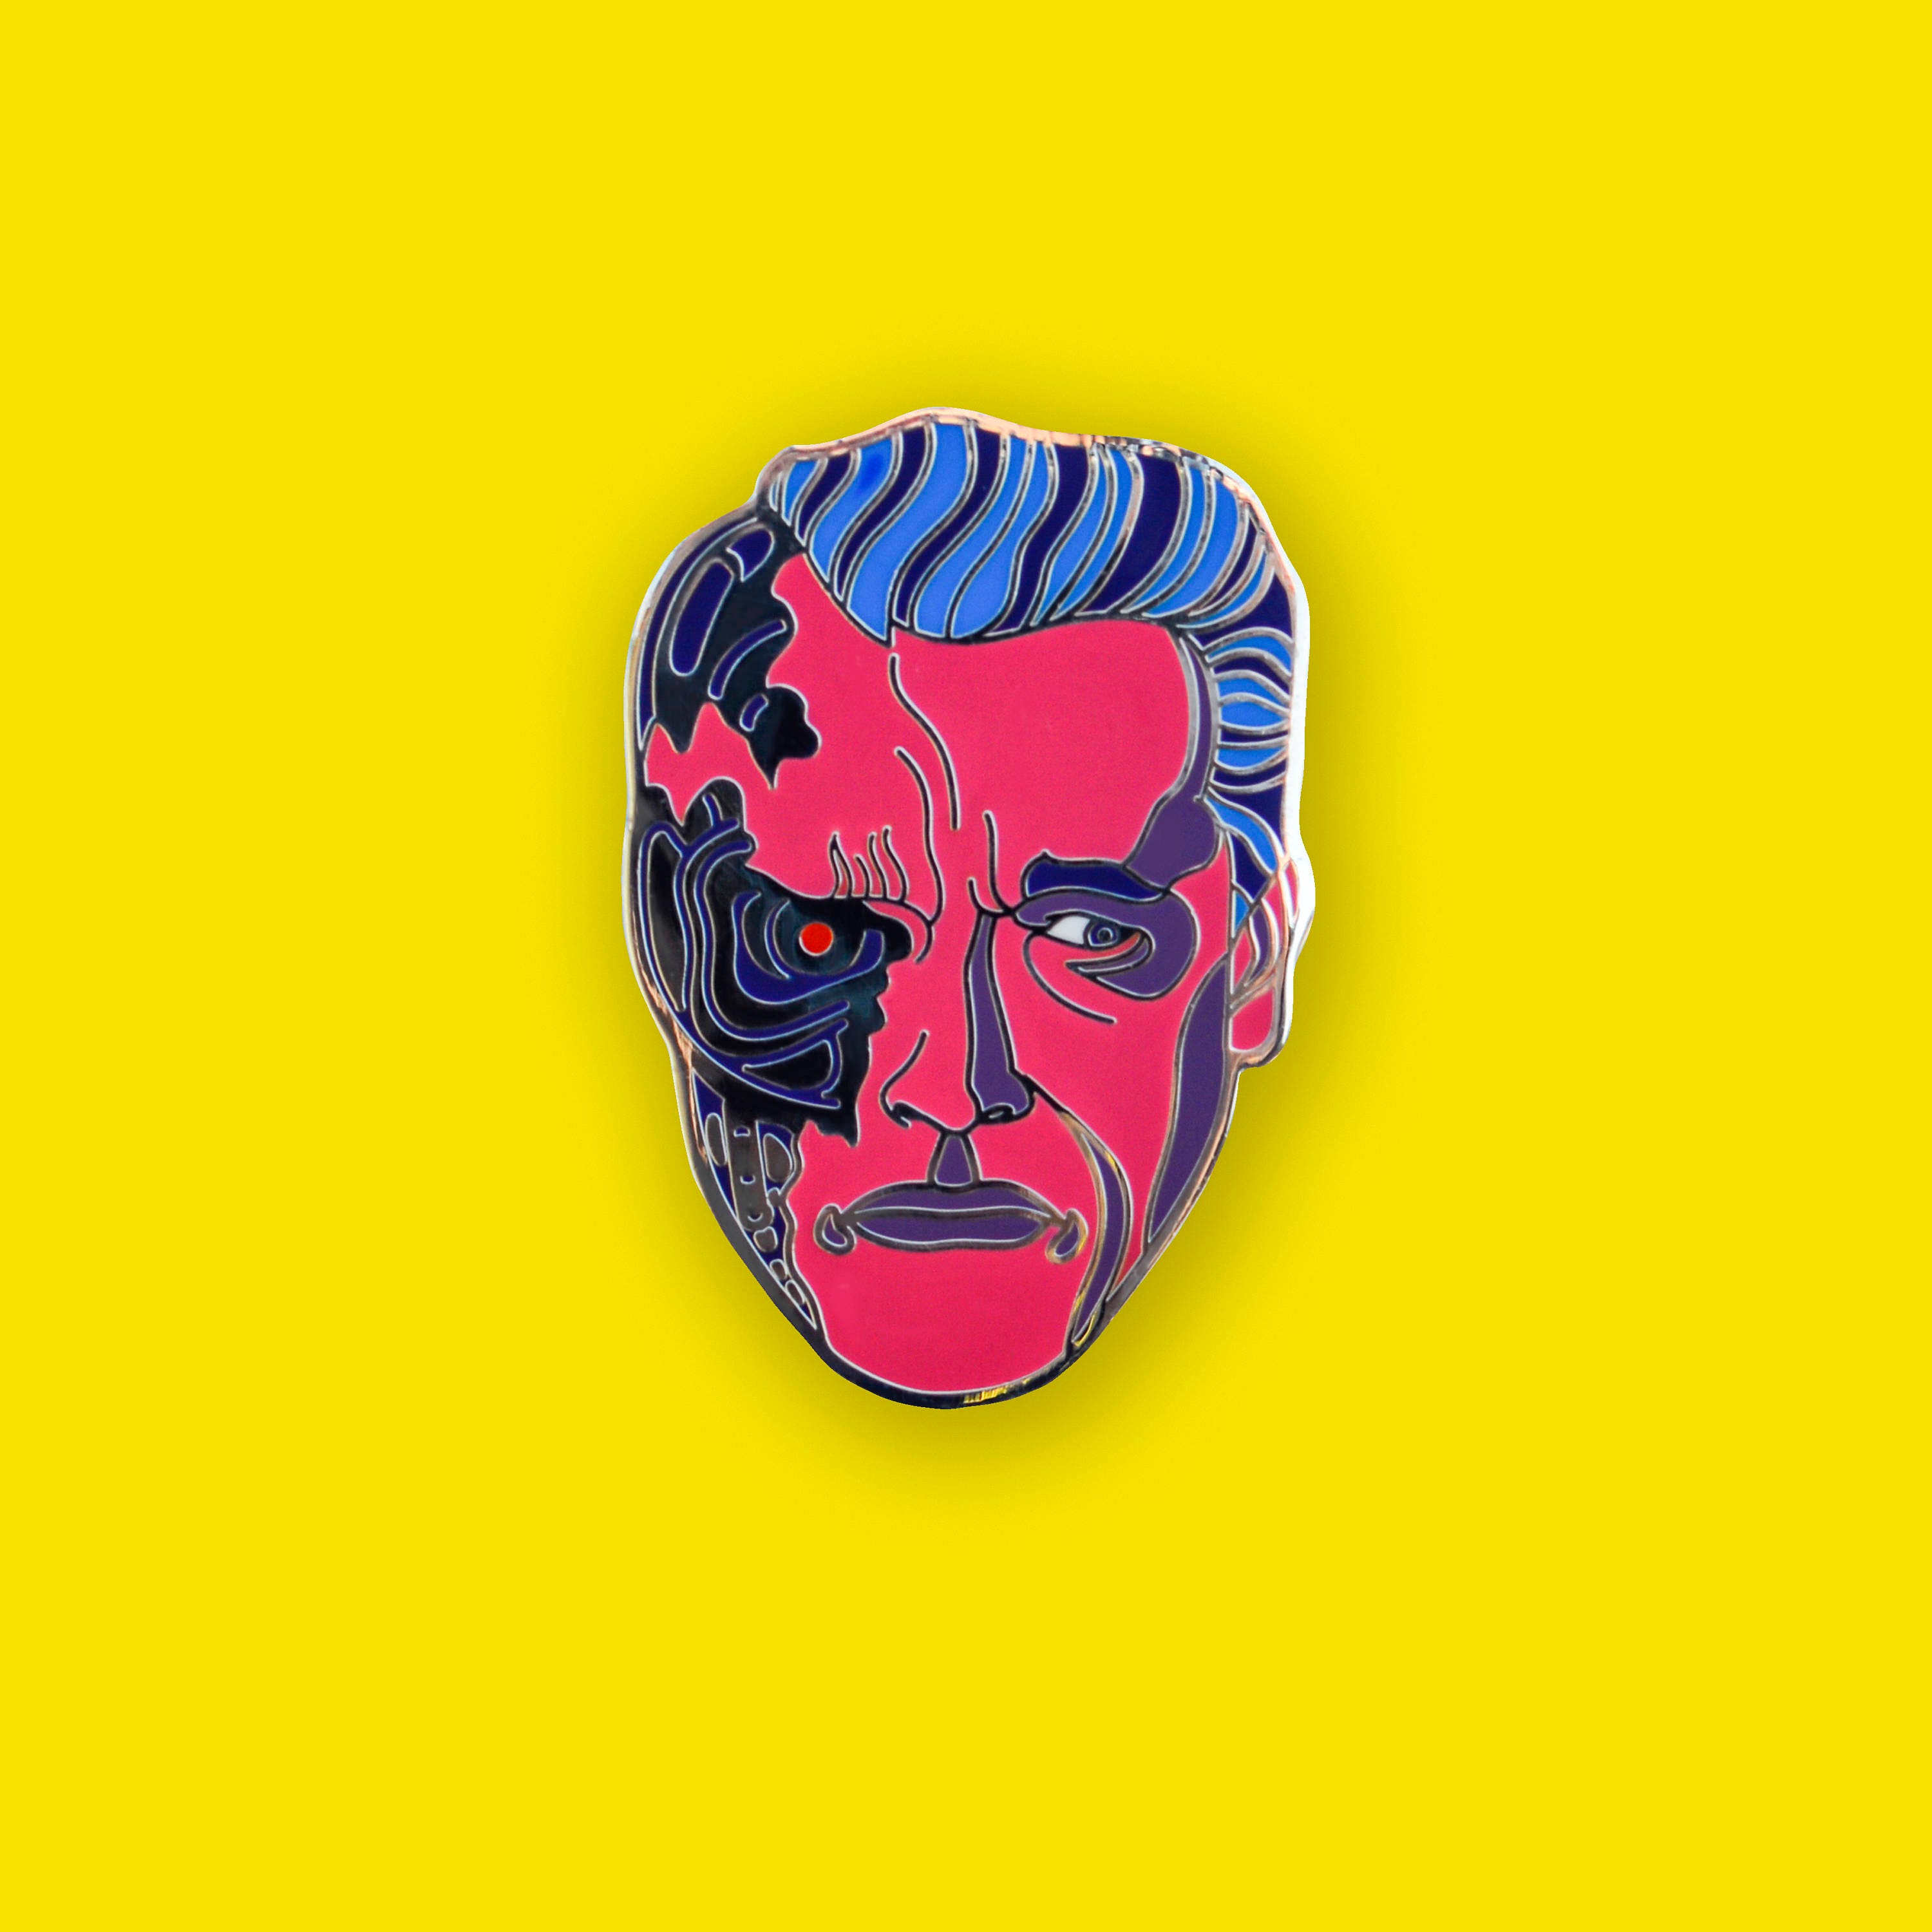 Terminator Arnold Schwarzenegger Enamel Pin Sci Fi Movie 